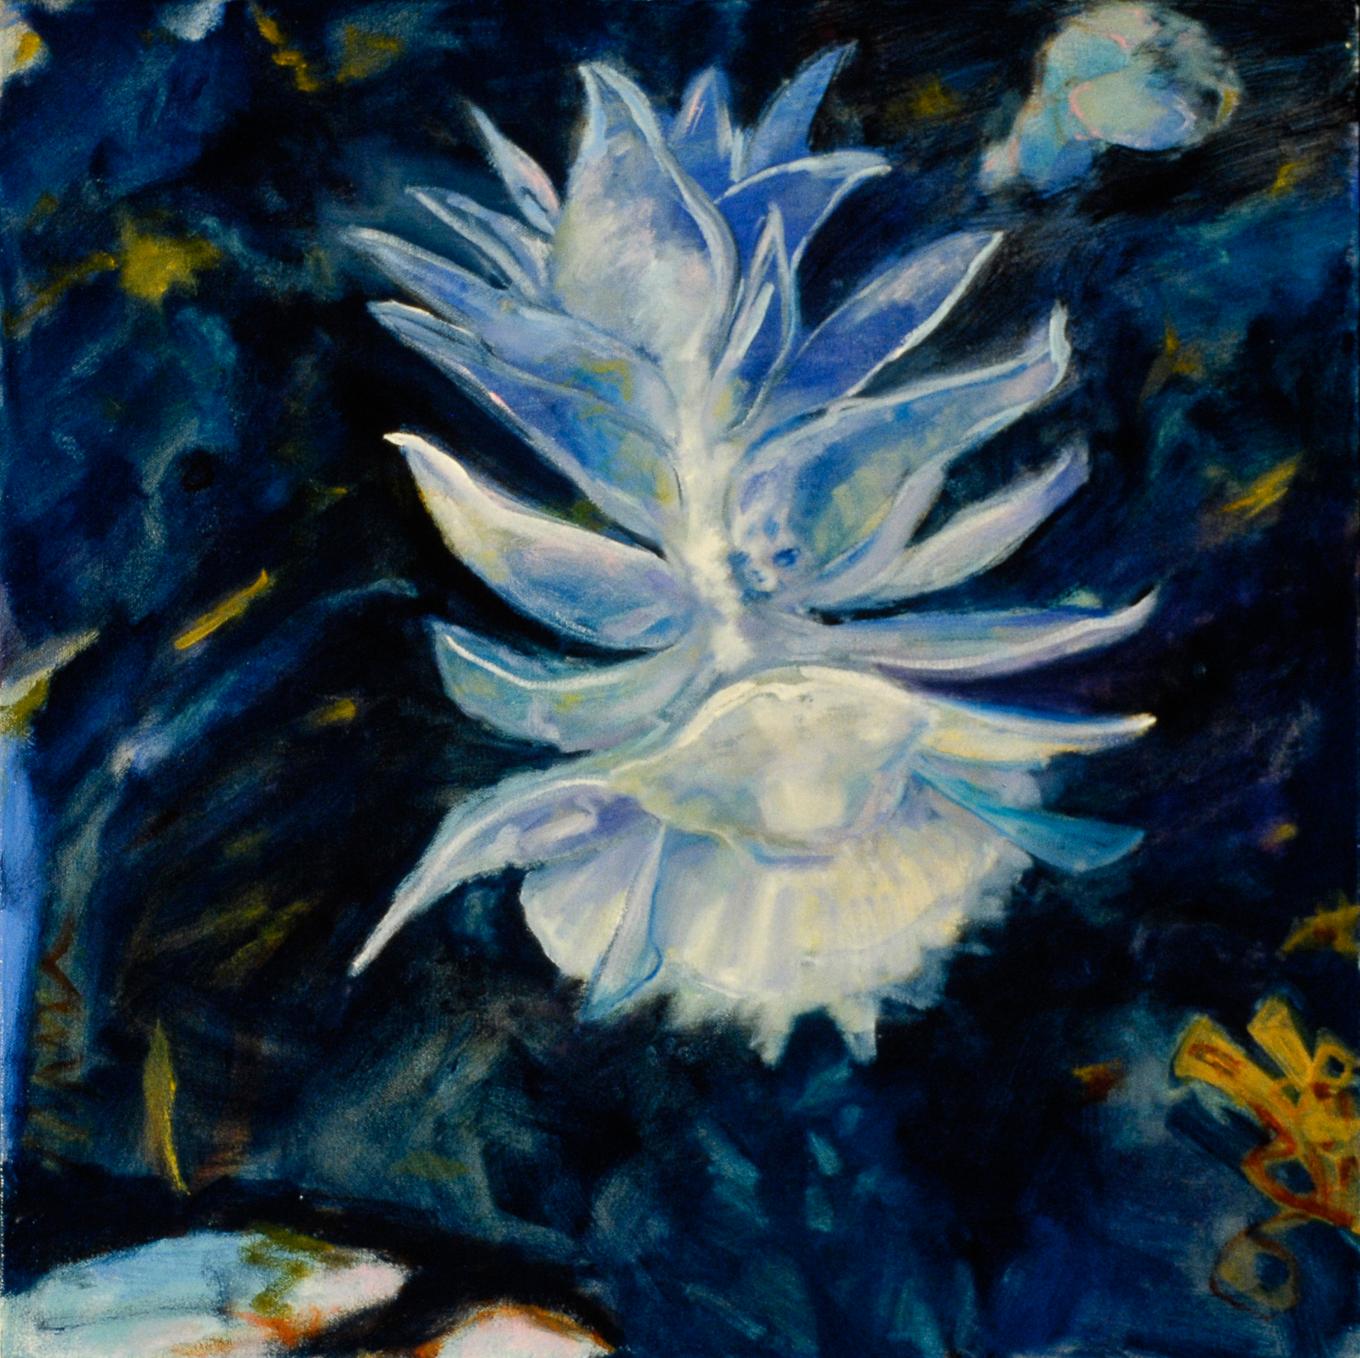 Ellen Hart Landscape Painting - Lantern Fish, Oil/Canvas, Light and Shadow, Underwater Landscape, Texas Artist